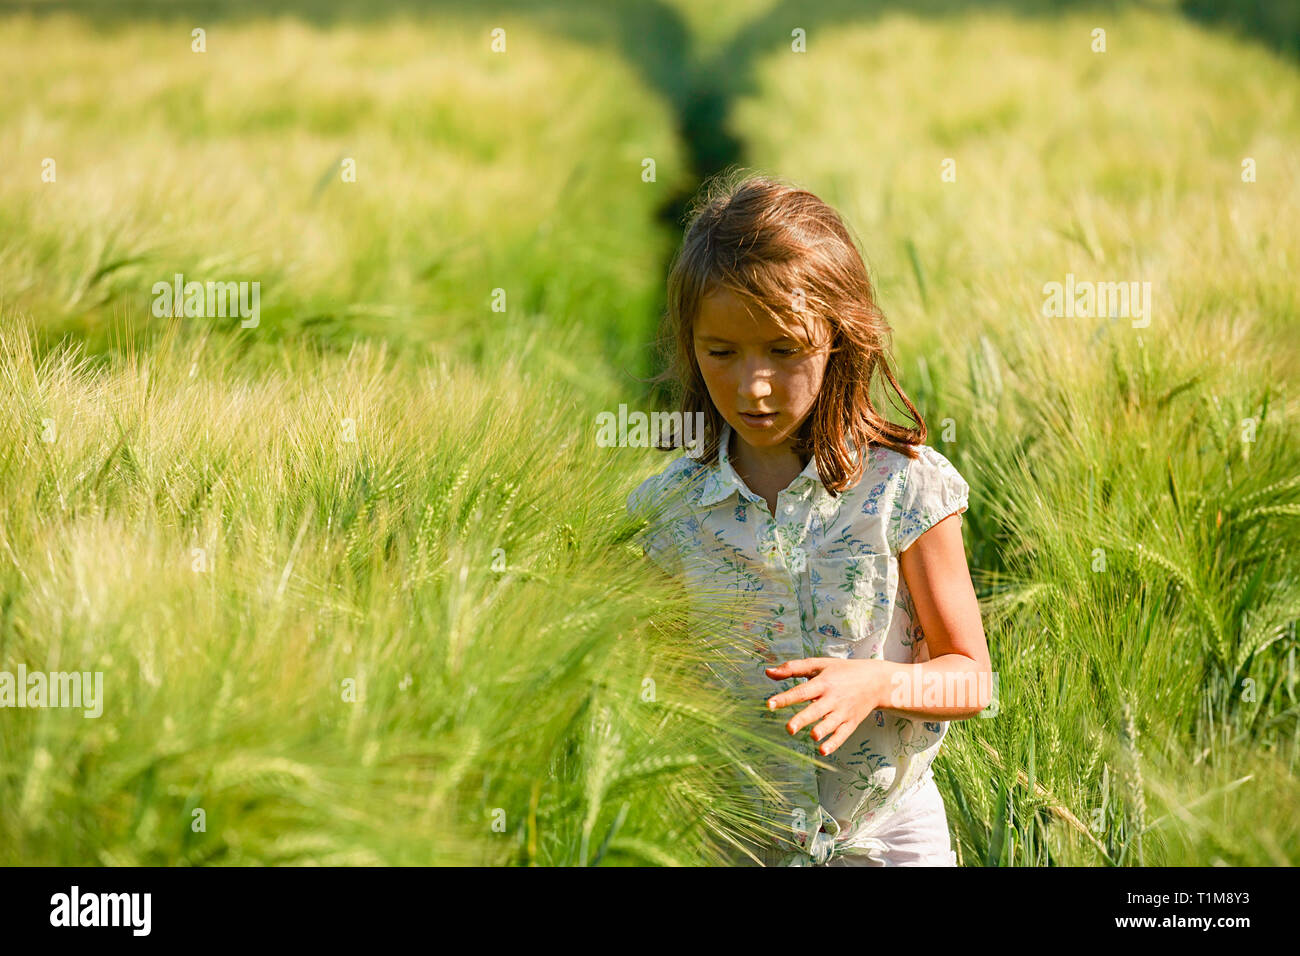 Curious girl walking in sunny, idyllic rural green wheat field Stock Photo